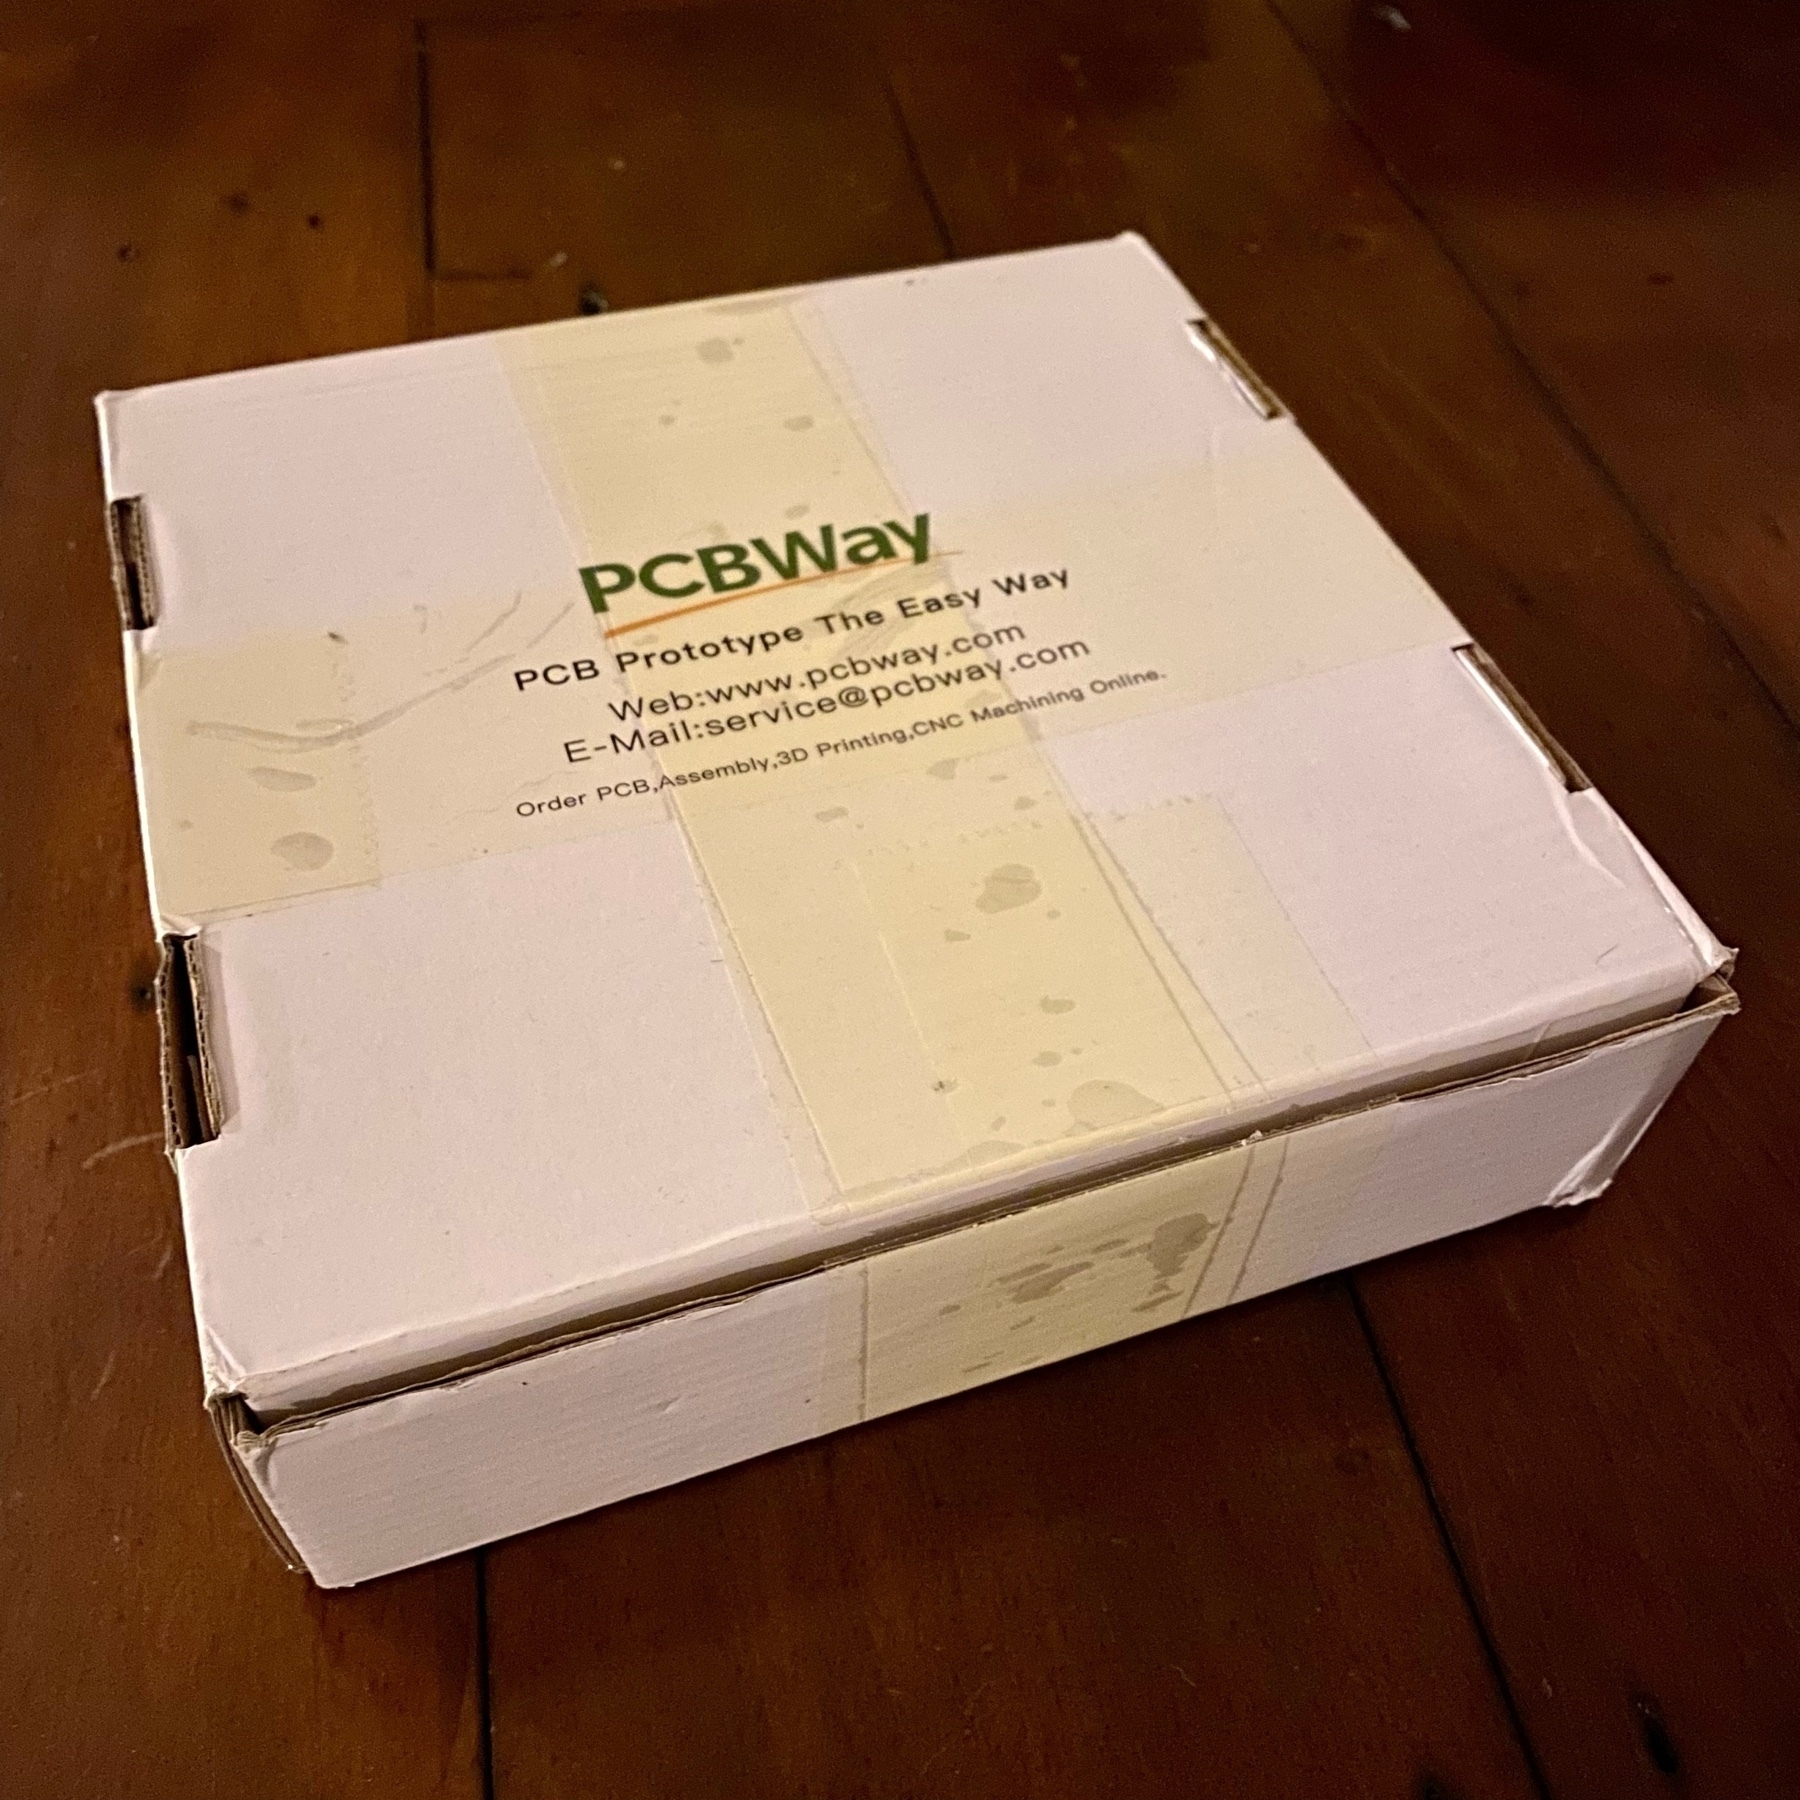 slim cardboard postage box with PCBWay branding